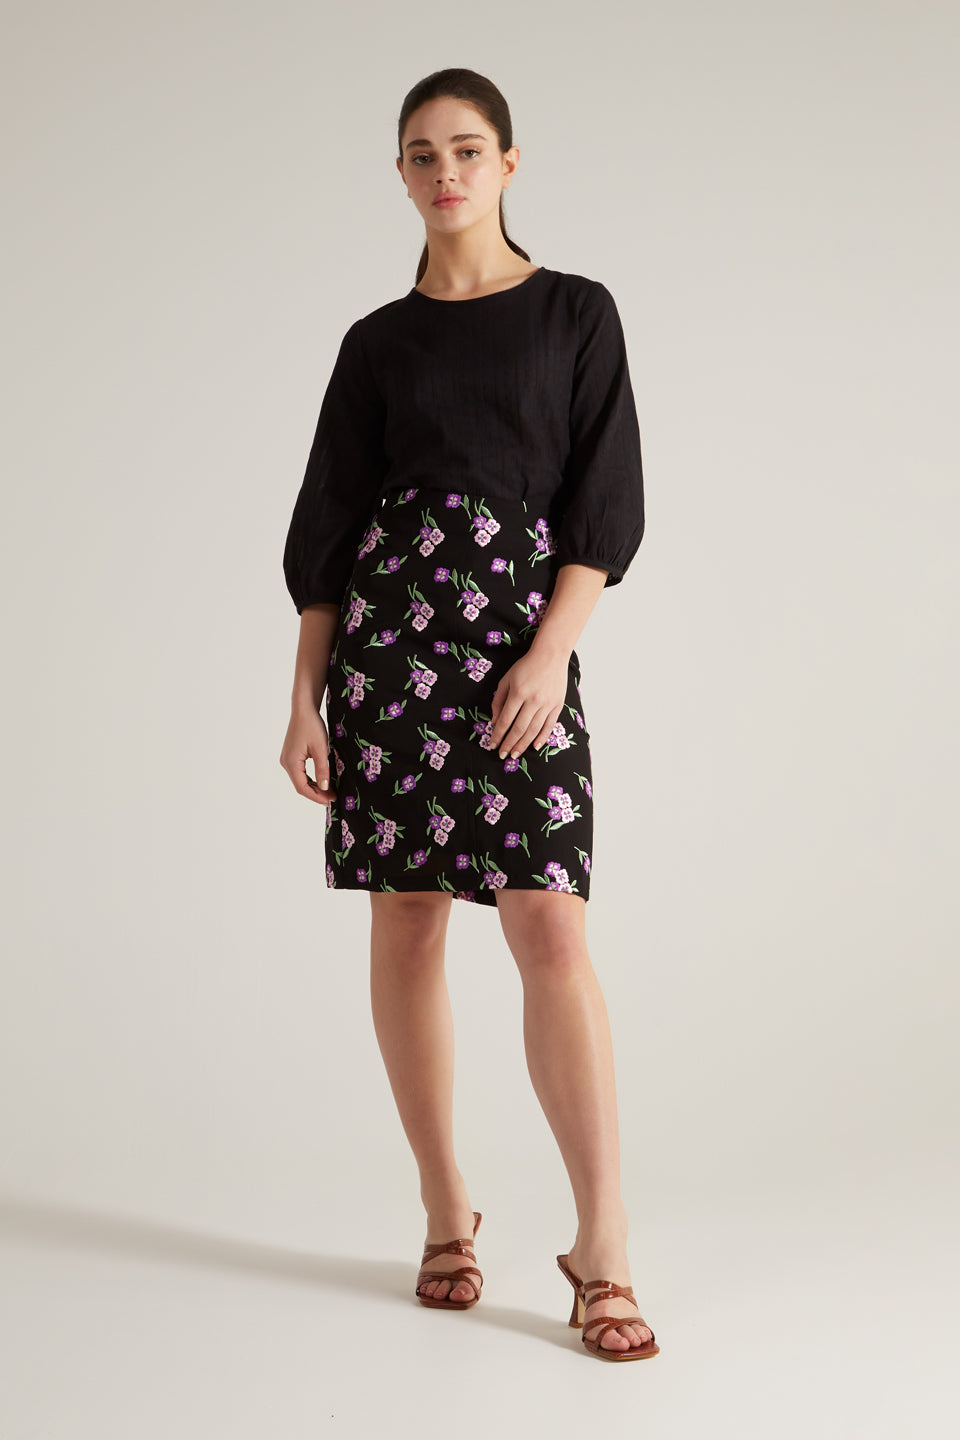 Adele Skirt - Size 0 & 1